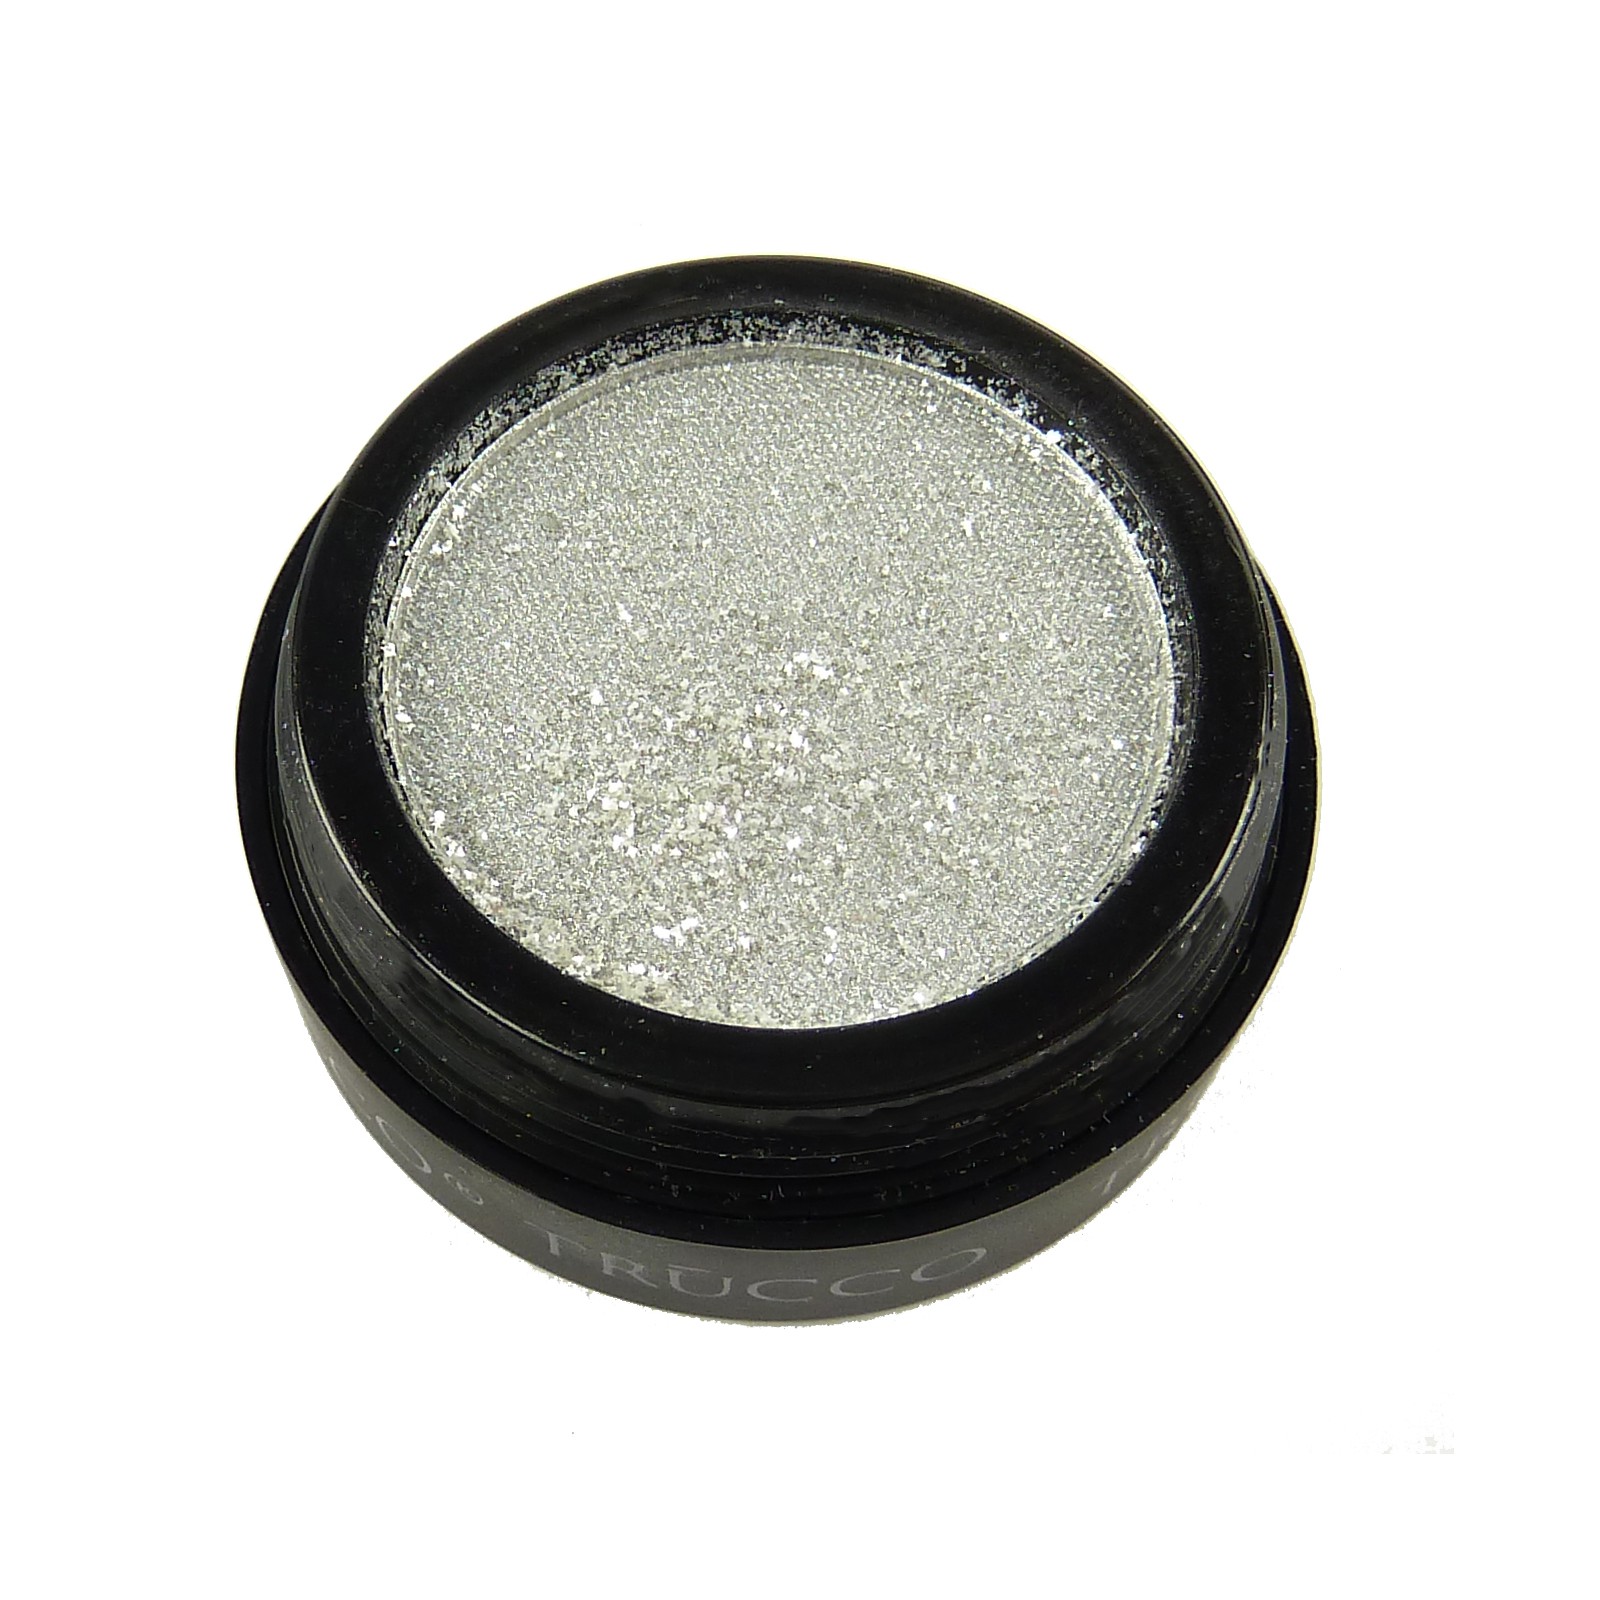 SEBASTIAN TRUCCO - VELVET ICE EYE COLOUR -  Lidschatten - Makeup - Kosmetik  - Platinum